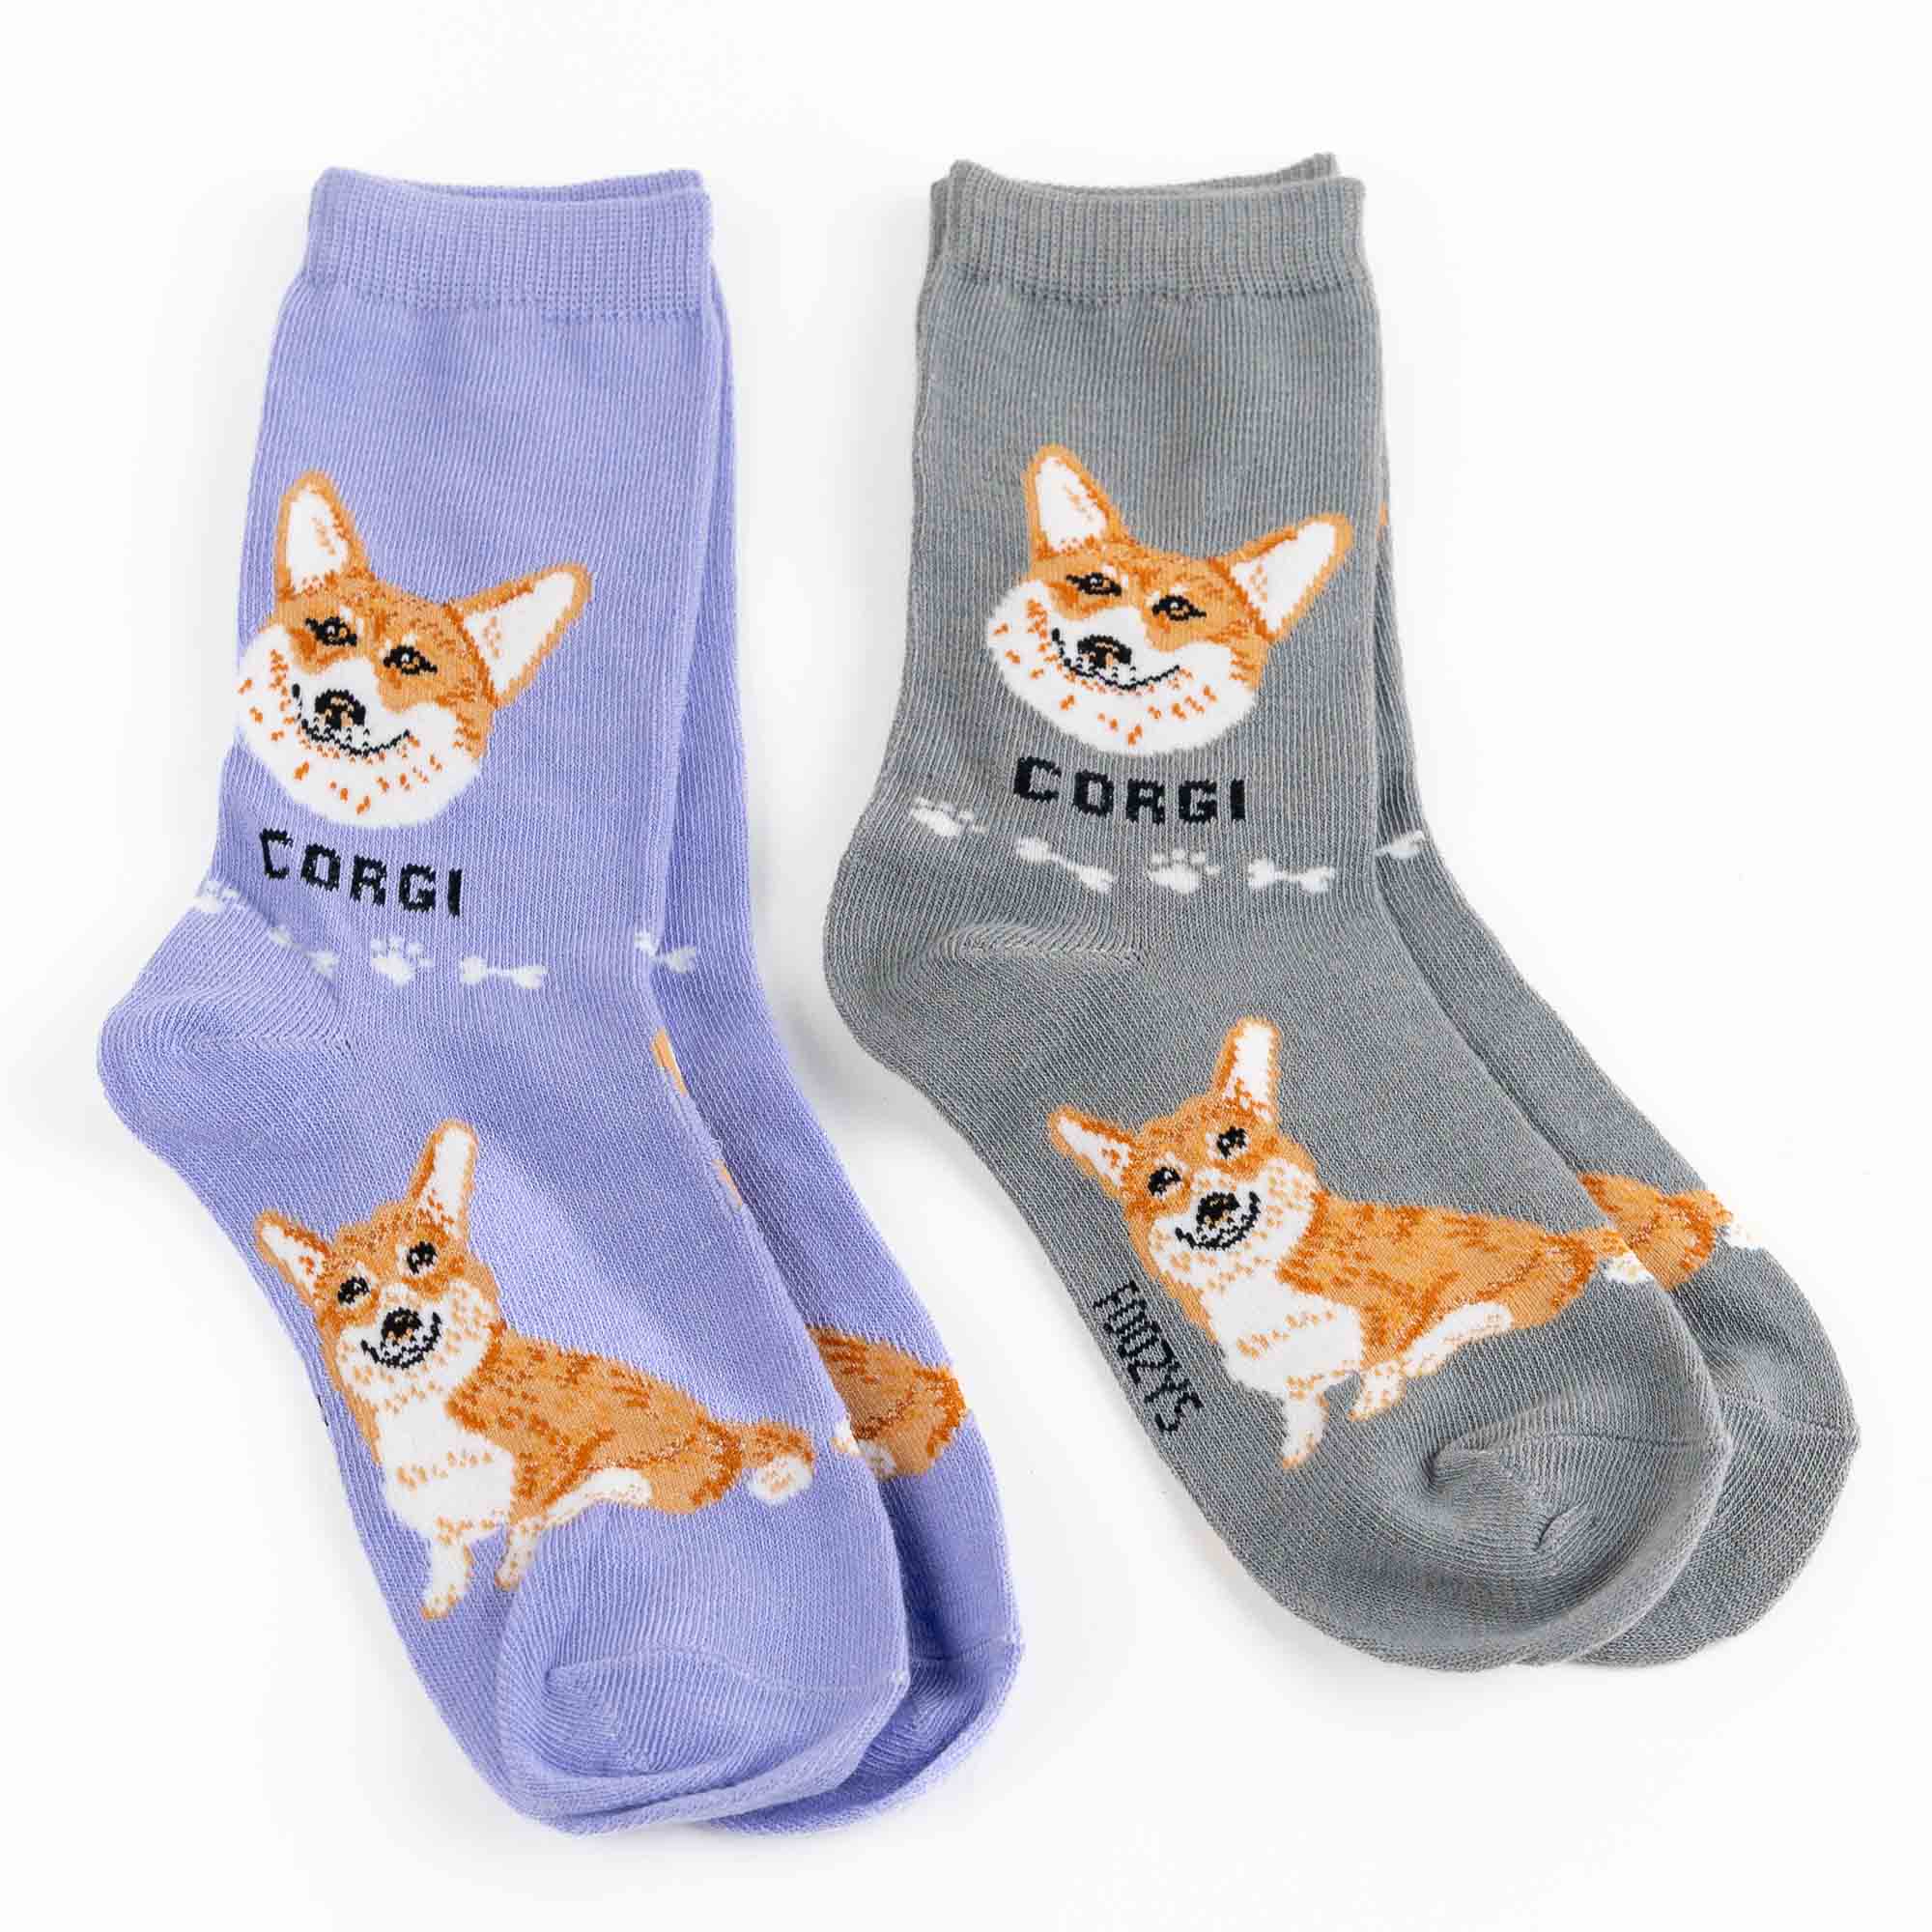 My Favorite Dog Breed Socks ❤️ Corgi - 2 Set Collection